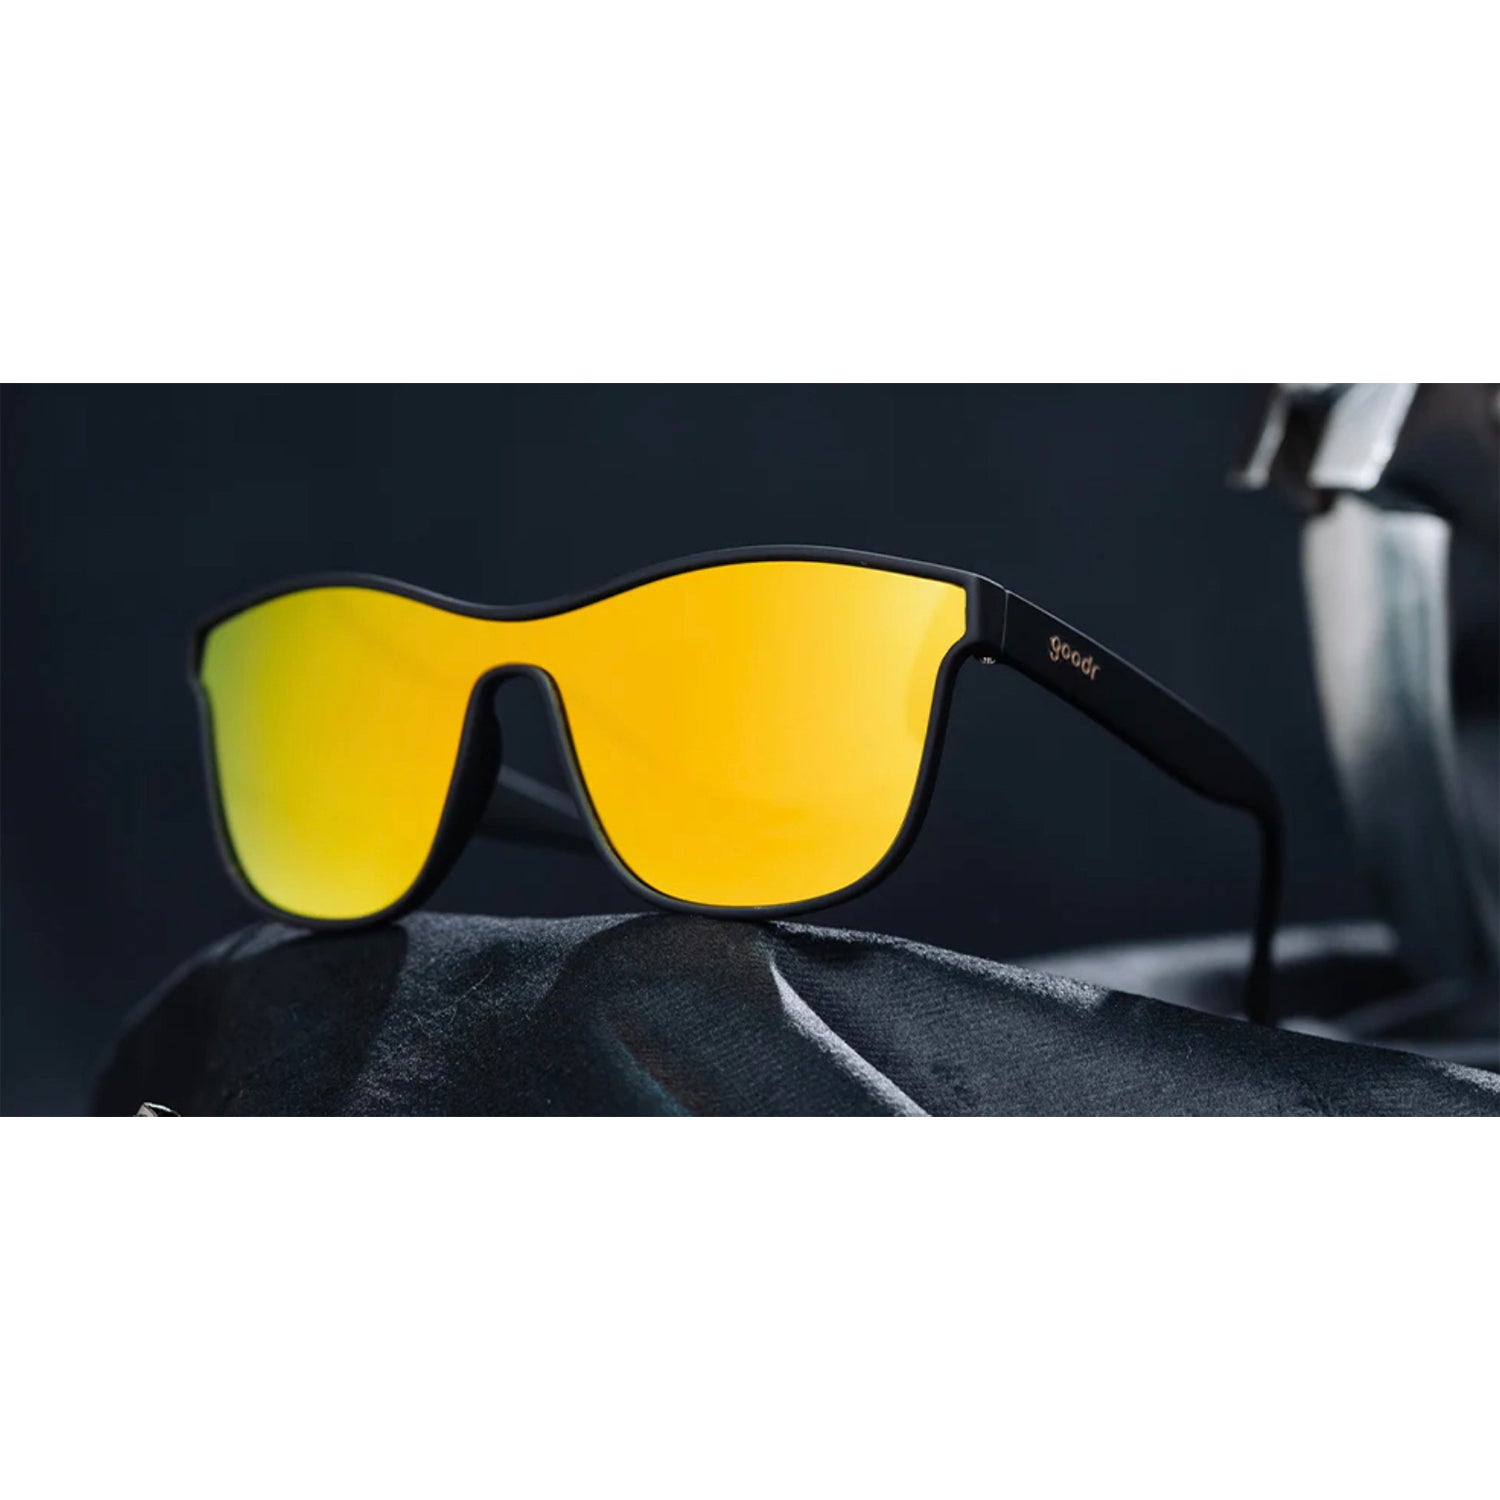 Goodr Sunglasses - From Zero to Blitzed